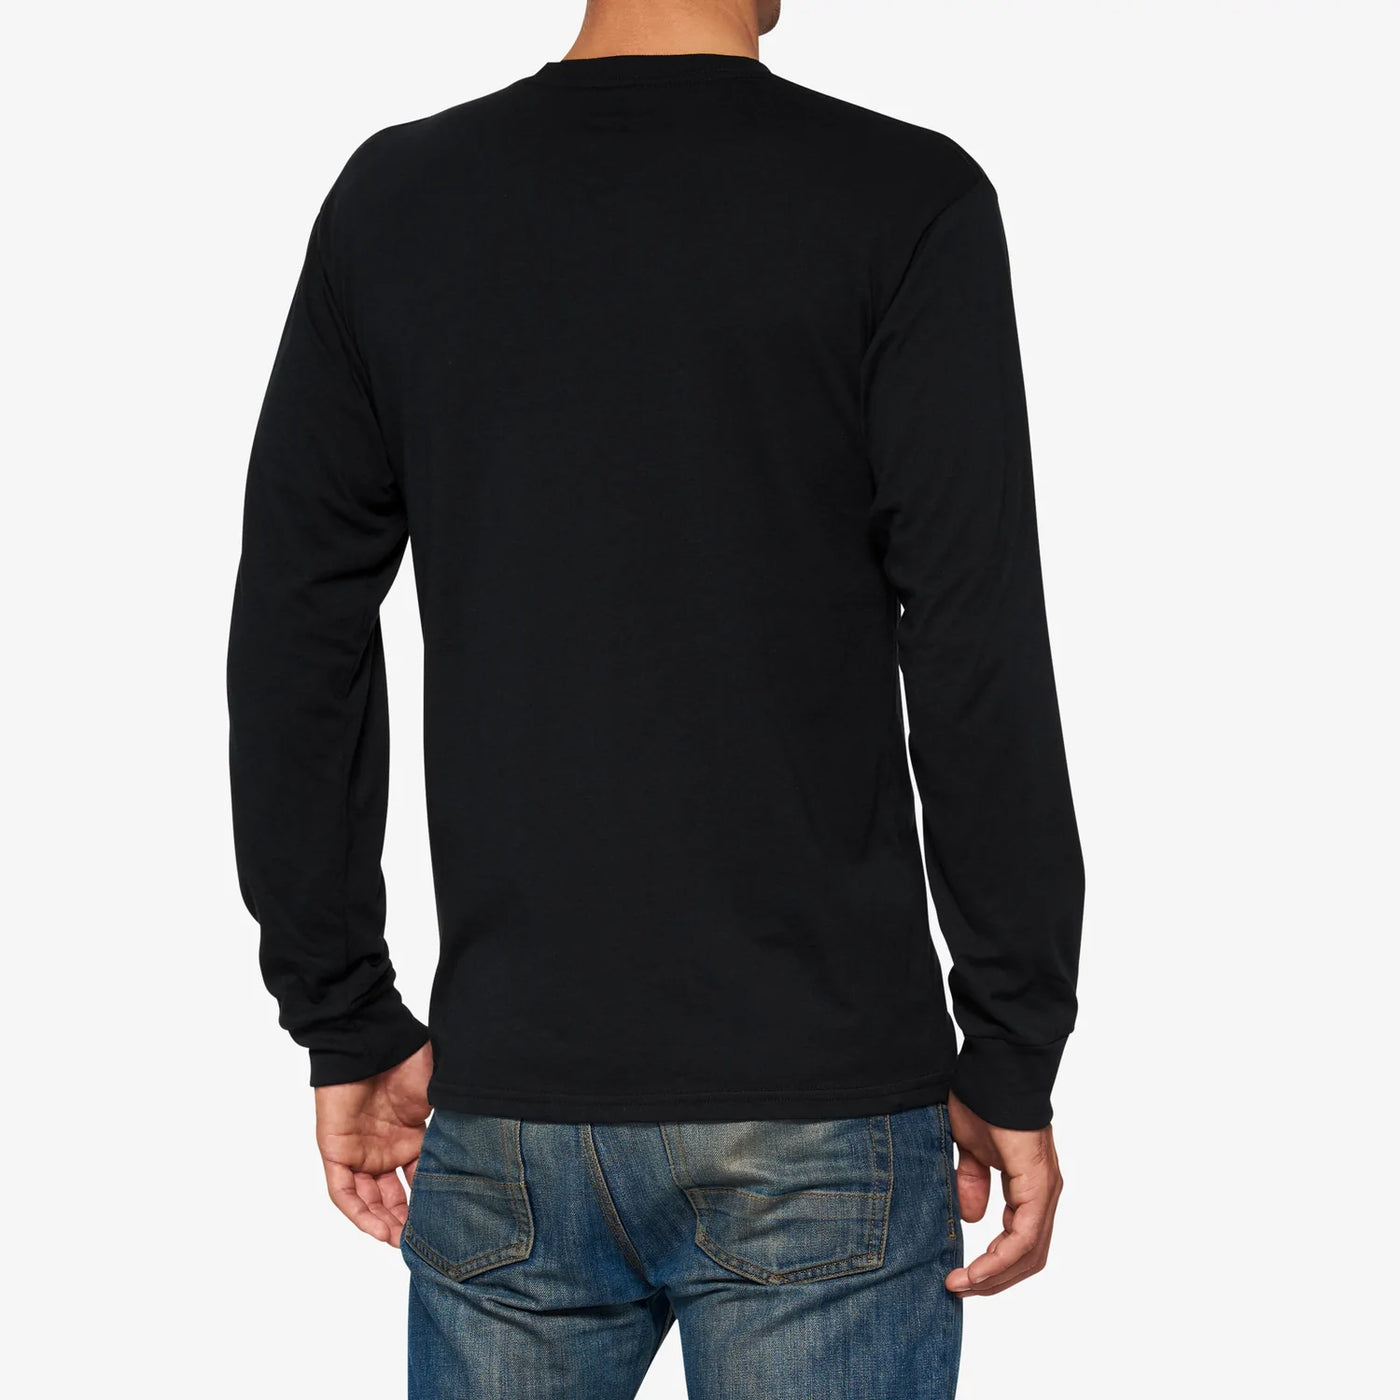 BILTO Long Sleeve T-Shirt Black